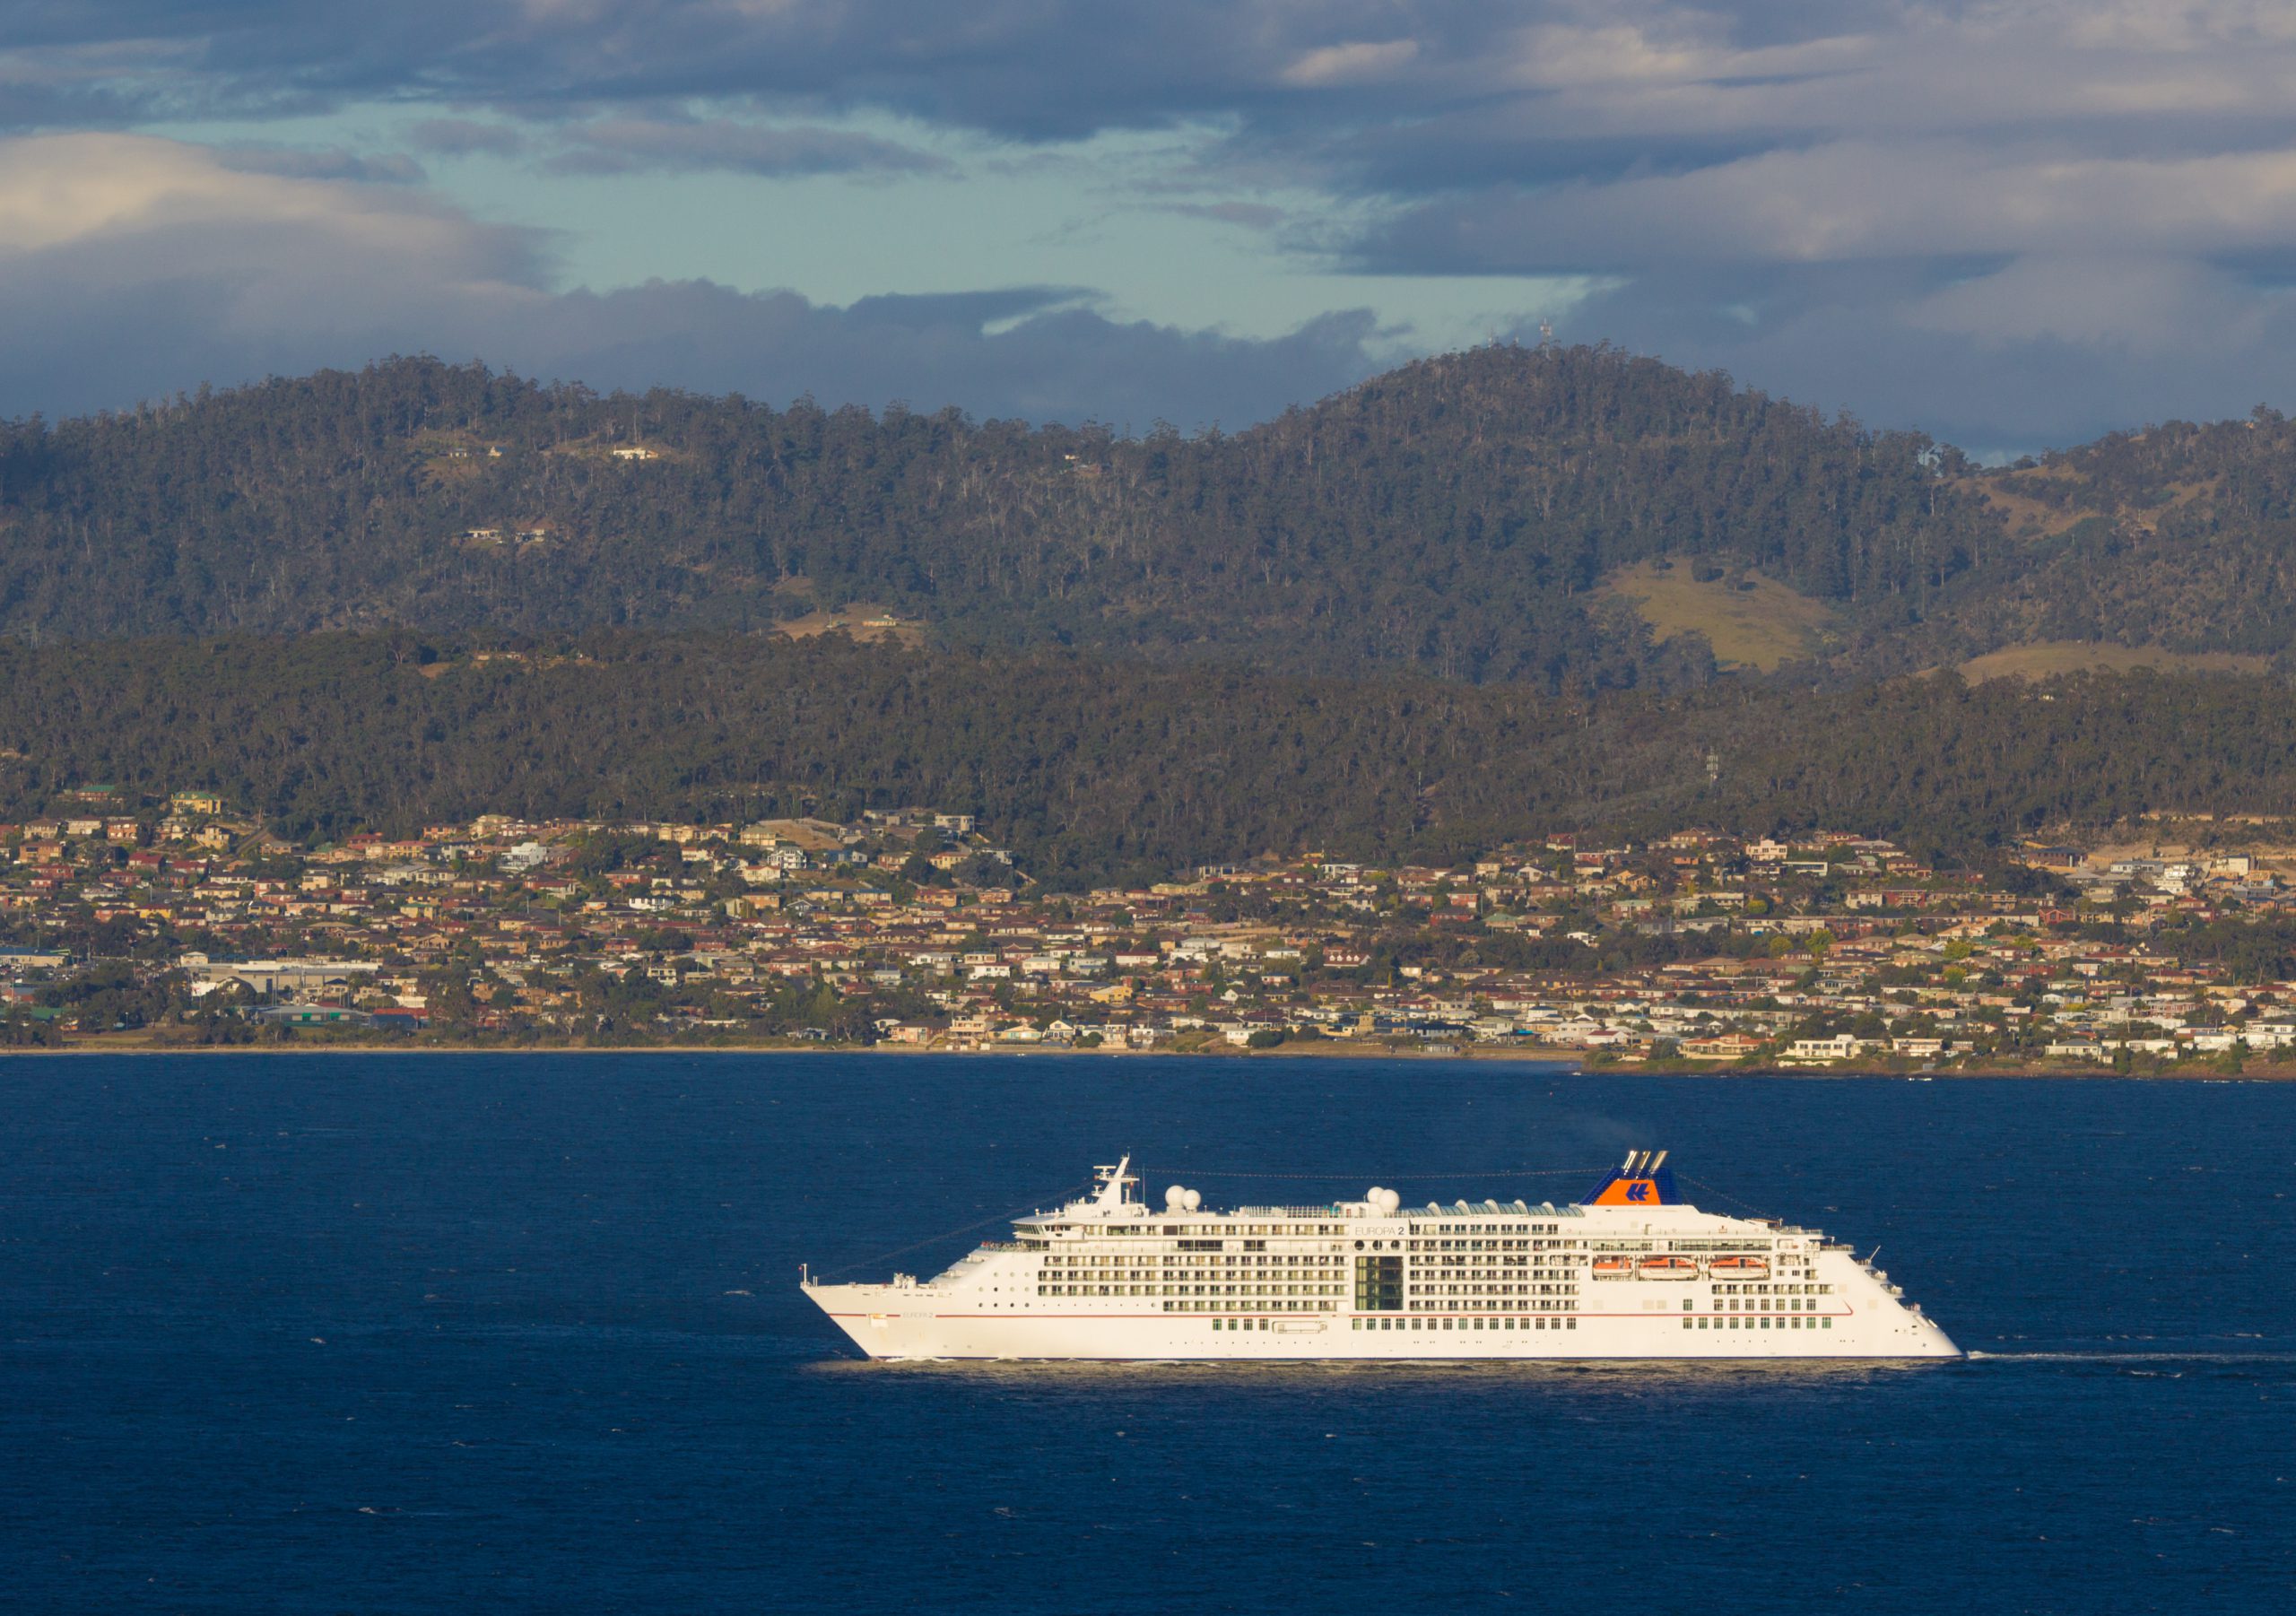 Tasmania complains of too many cruise ships